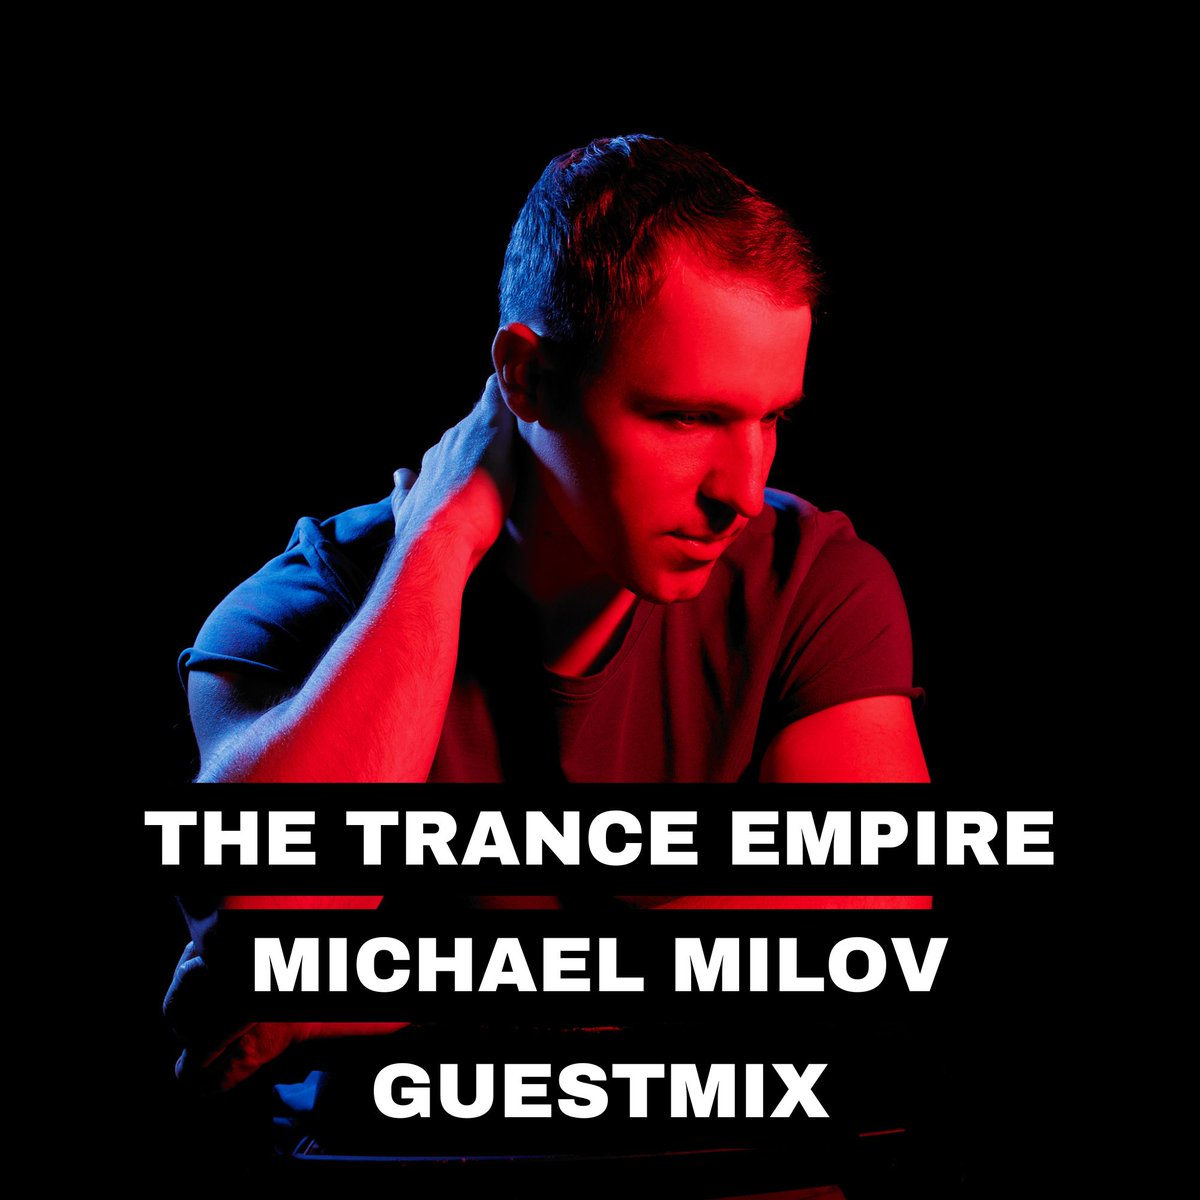 We welcome Michael Milov to The Trance Empire Guestmix 🔥 hypeddit.com/TTEMichaelMilov #trance #trancefamily #trancemusic ❤️